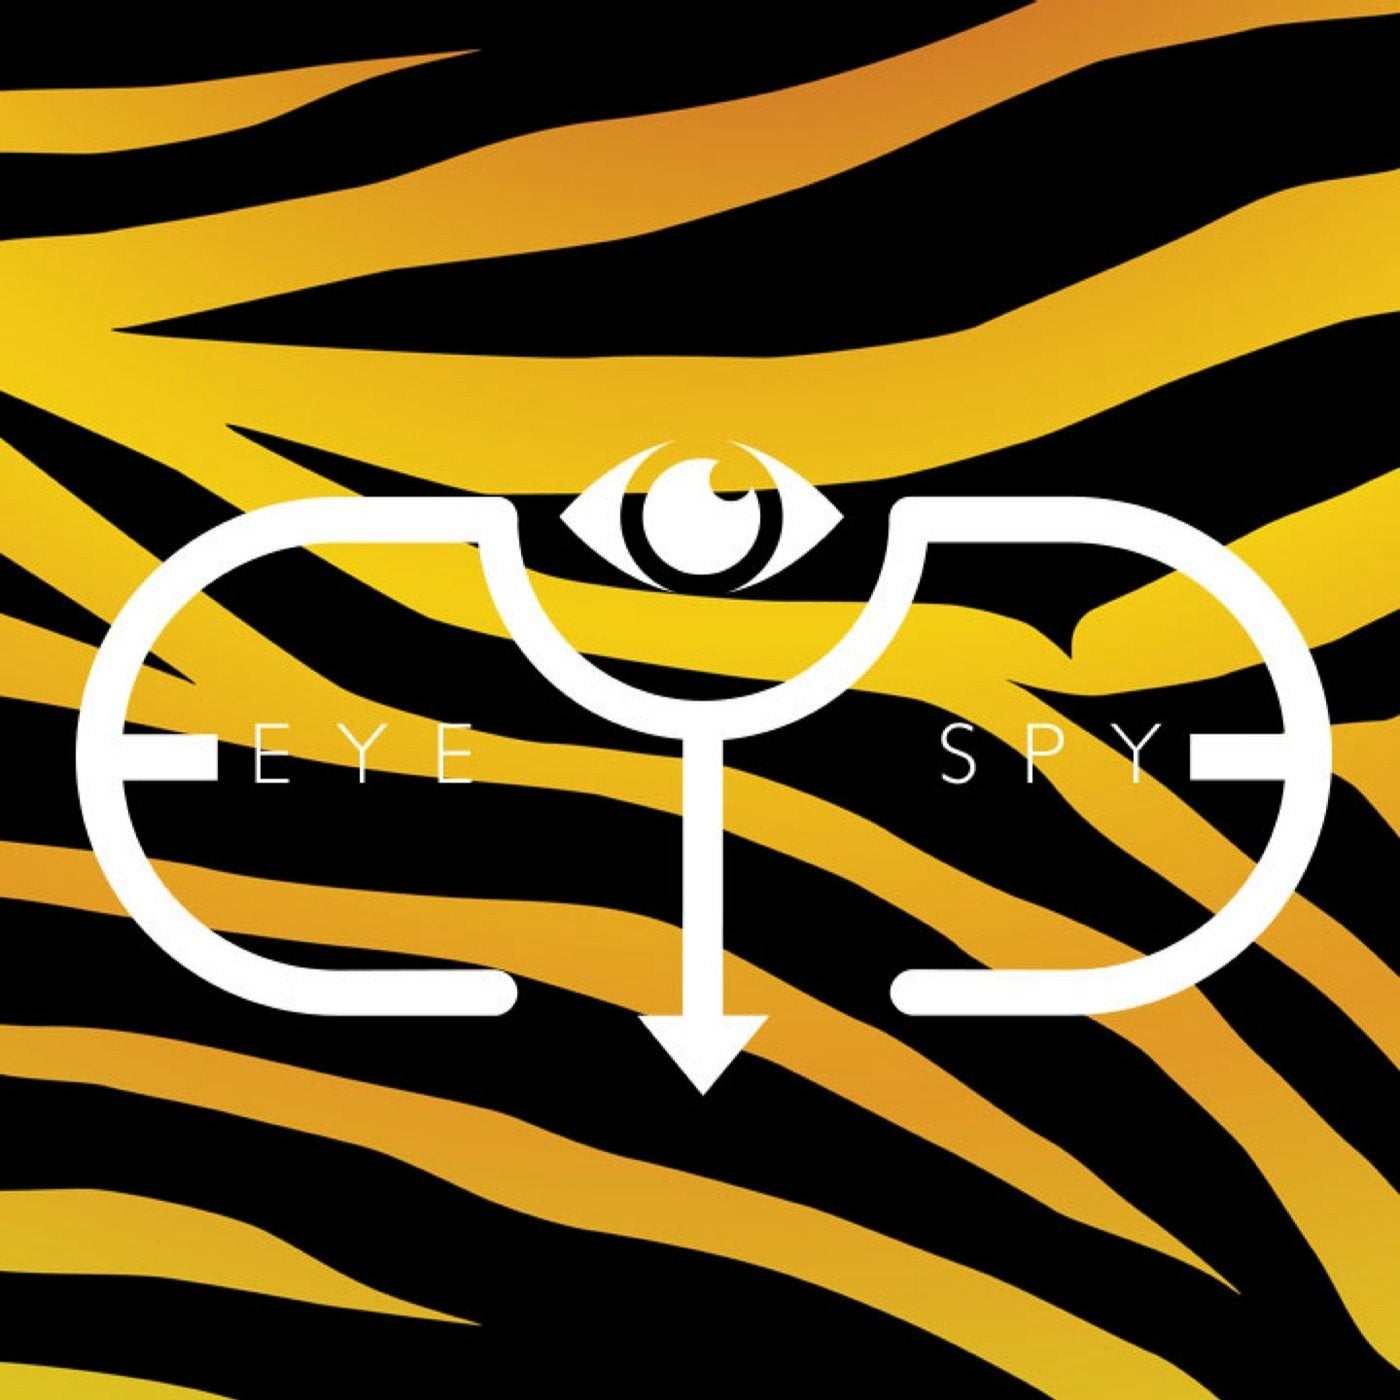 Adam Collins & Andrew Hobolt Presents: "Tigers On Fire"